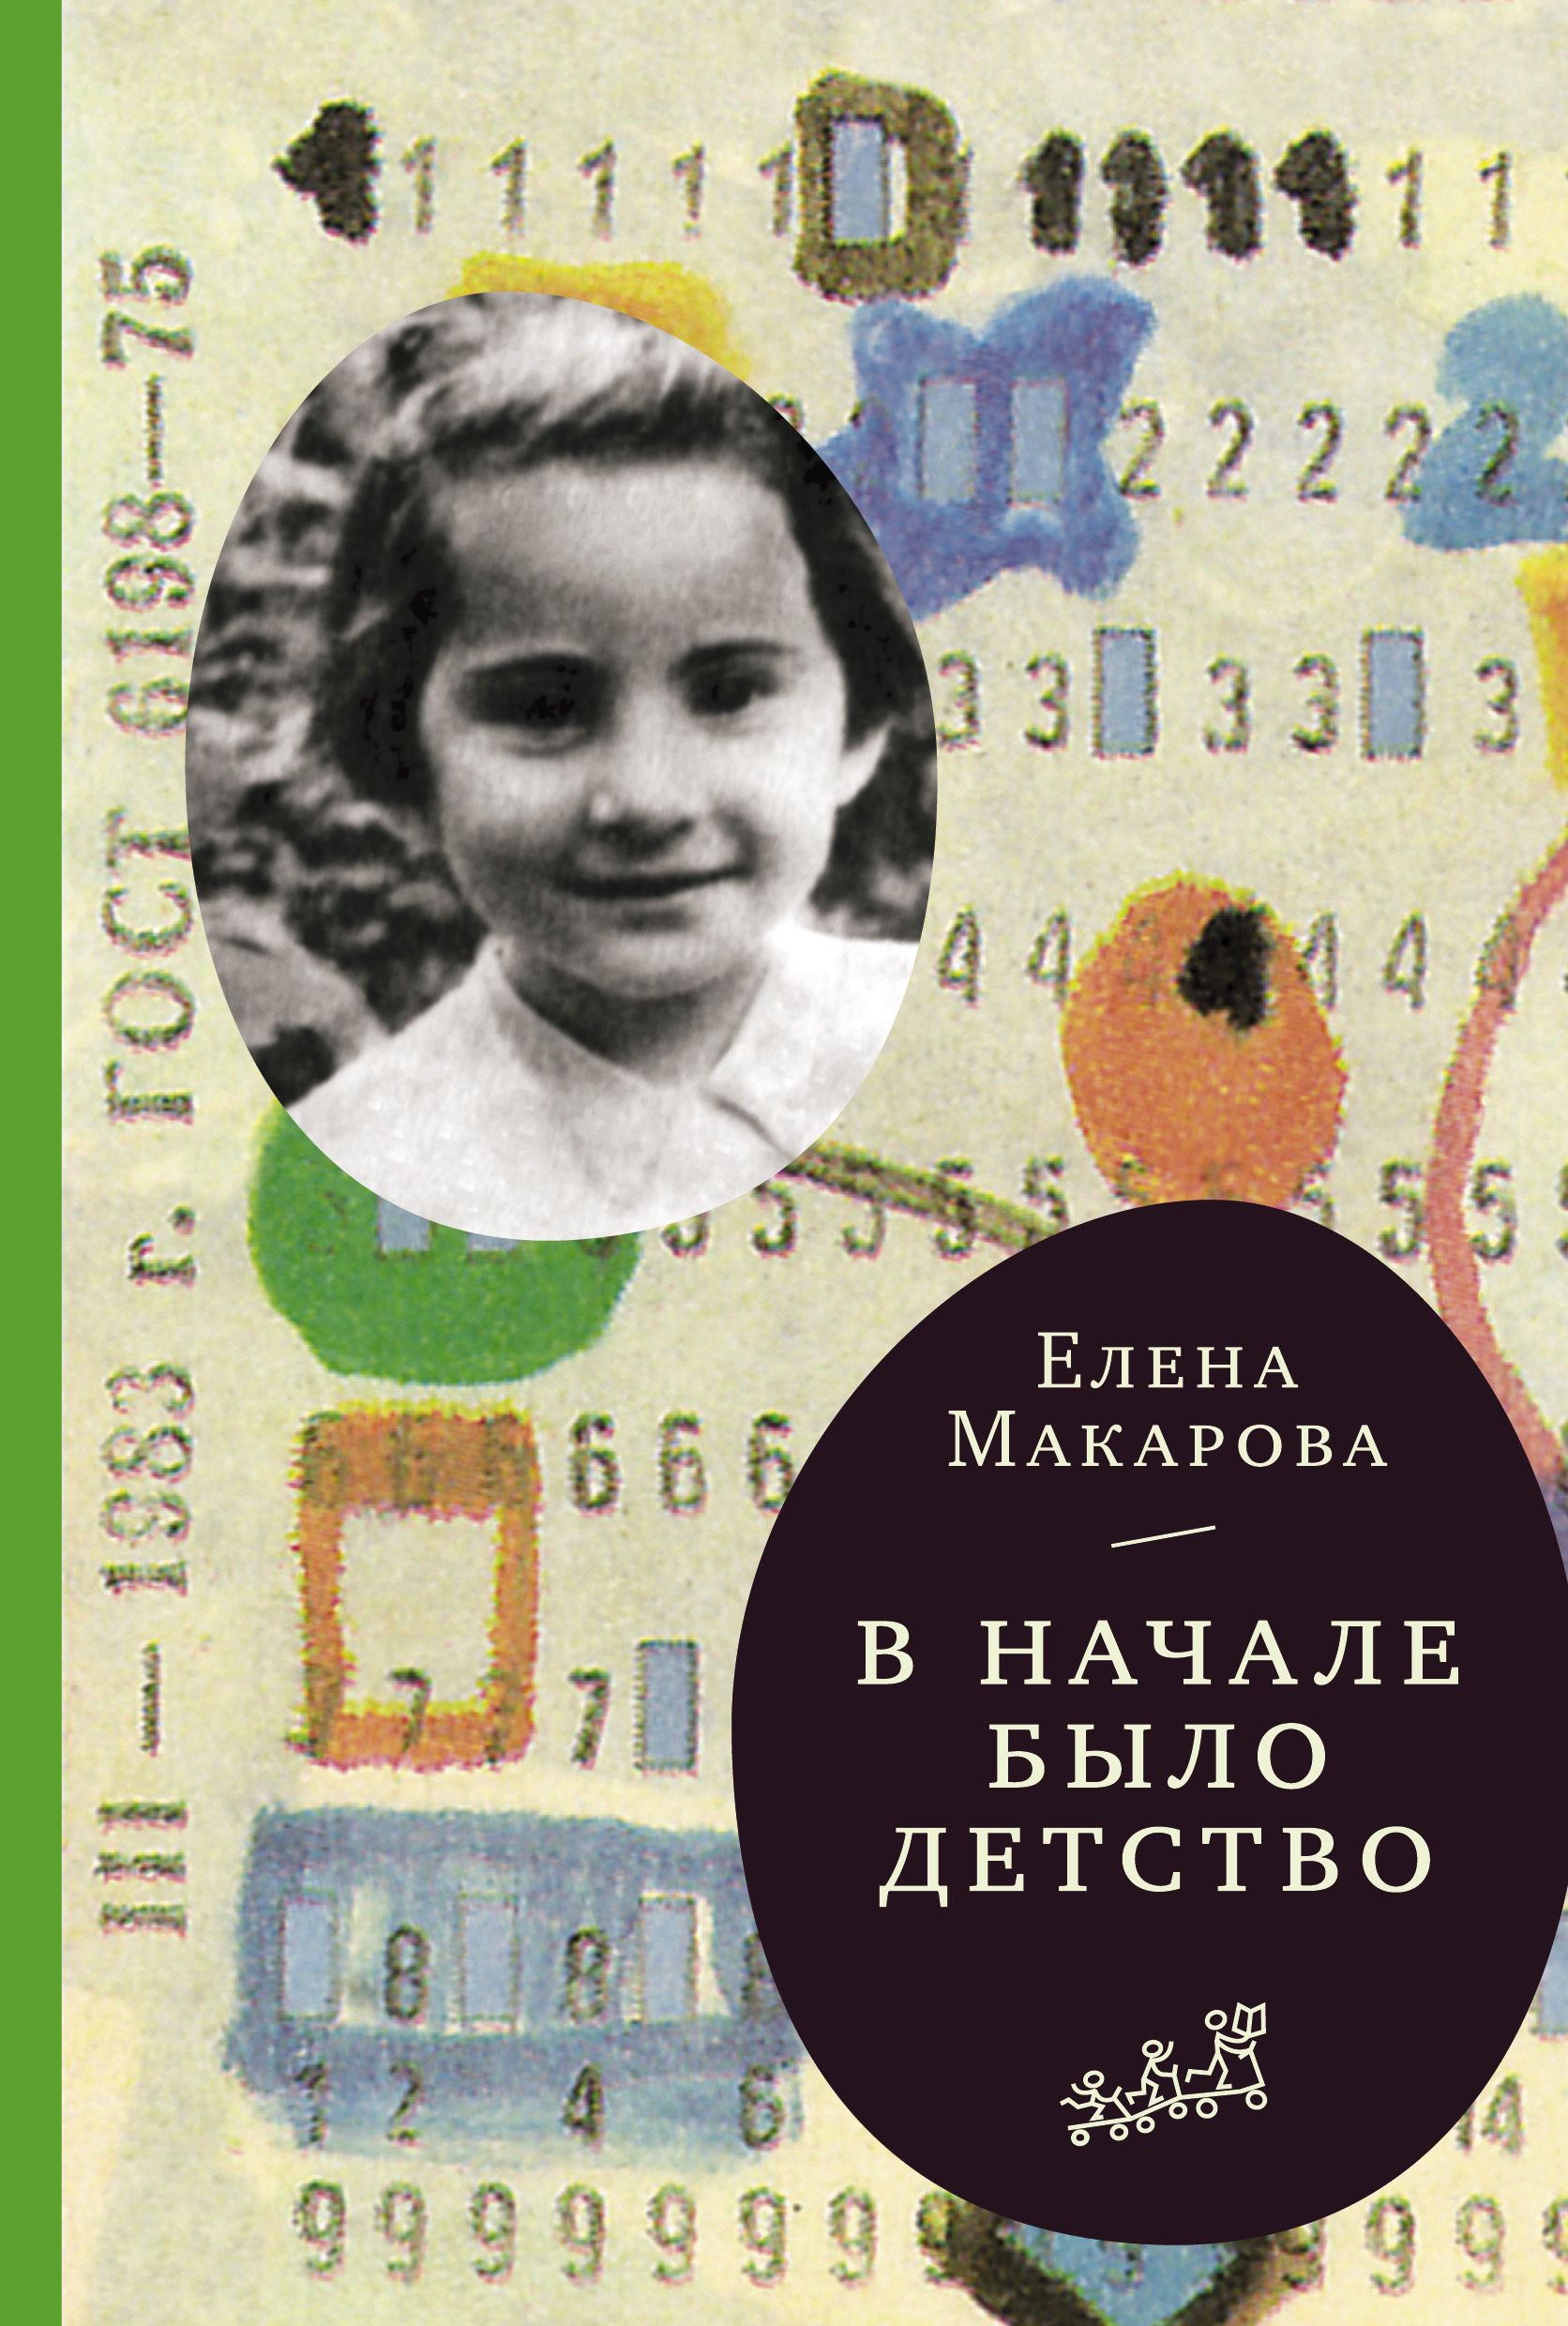 Book “В начале было детство” by Елена Макарова